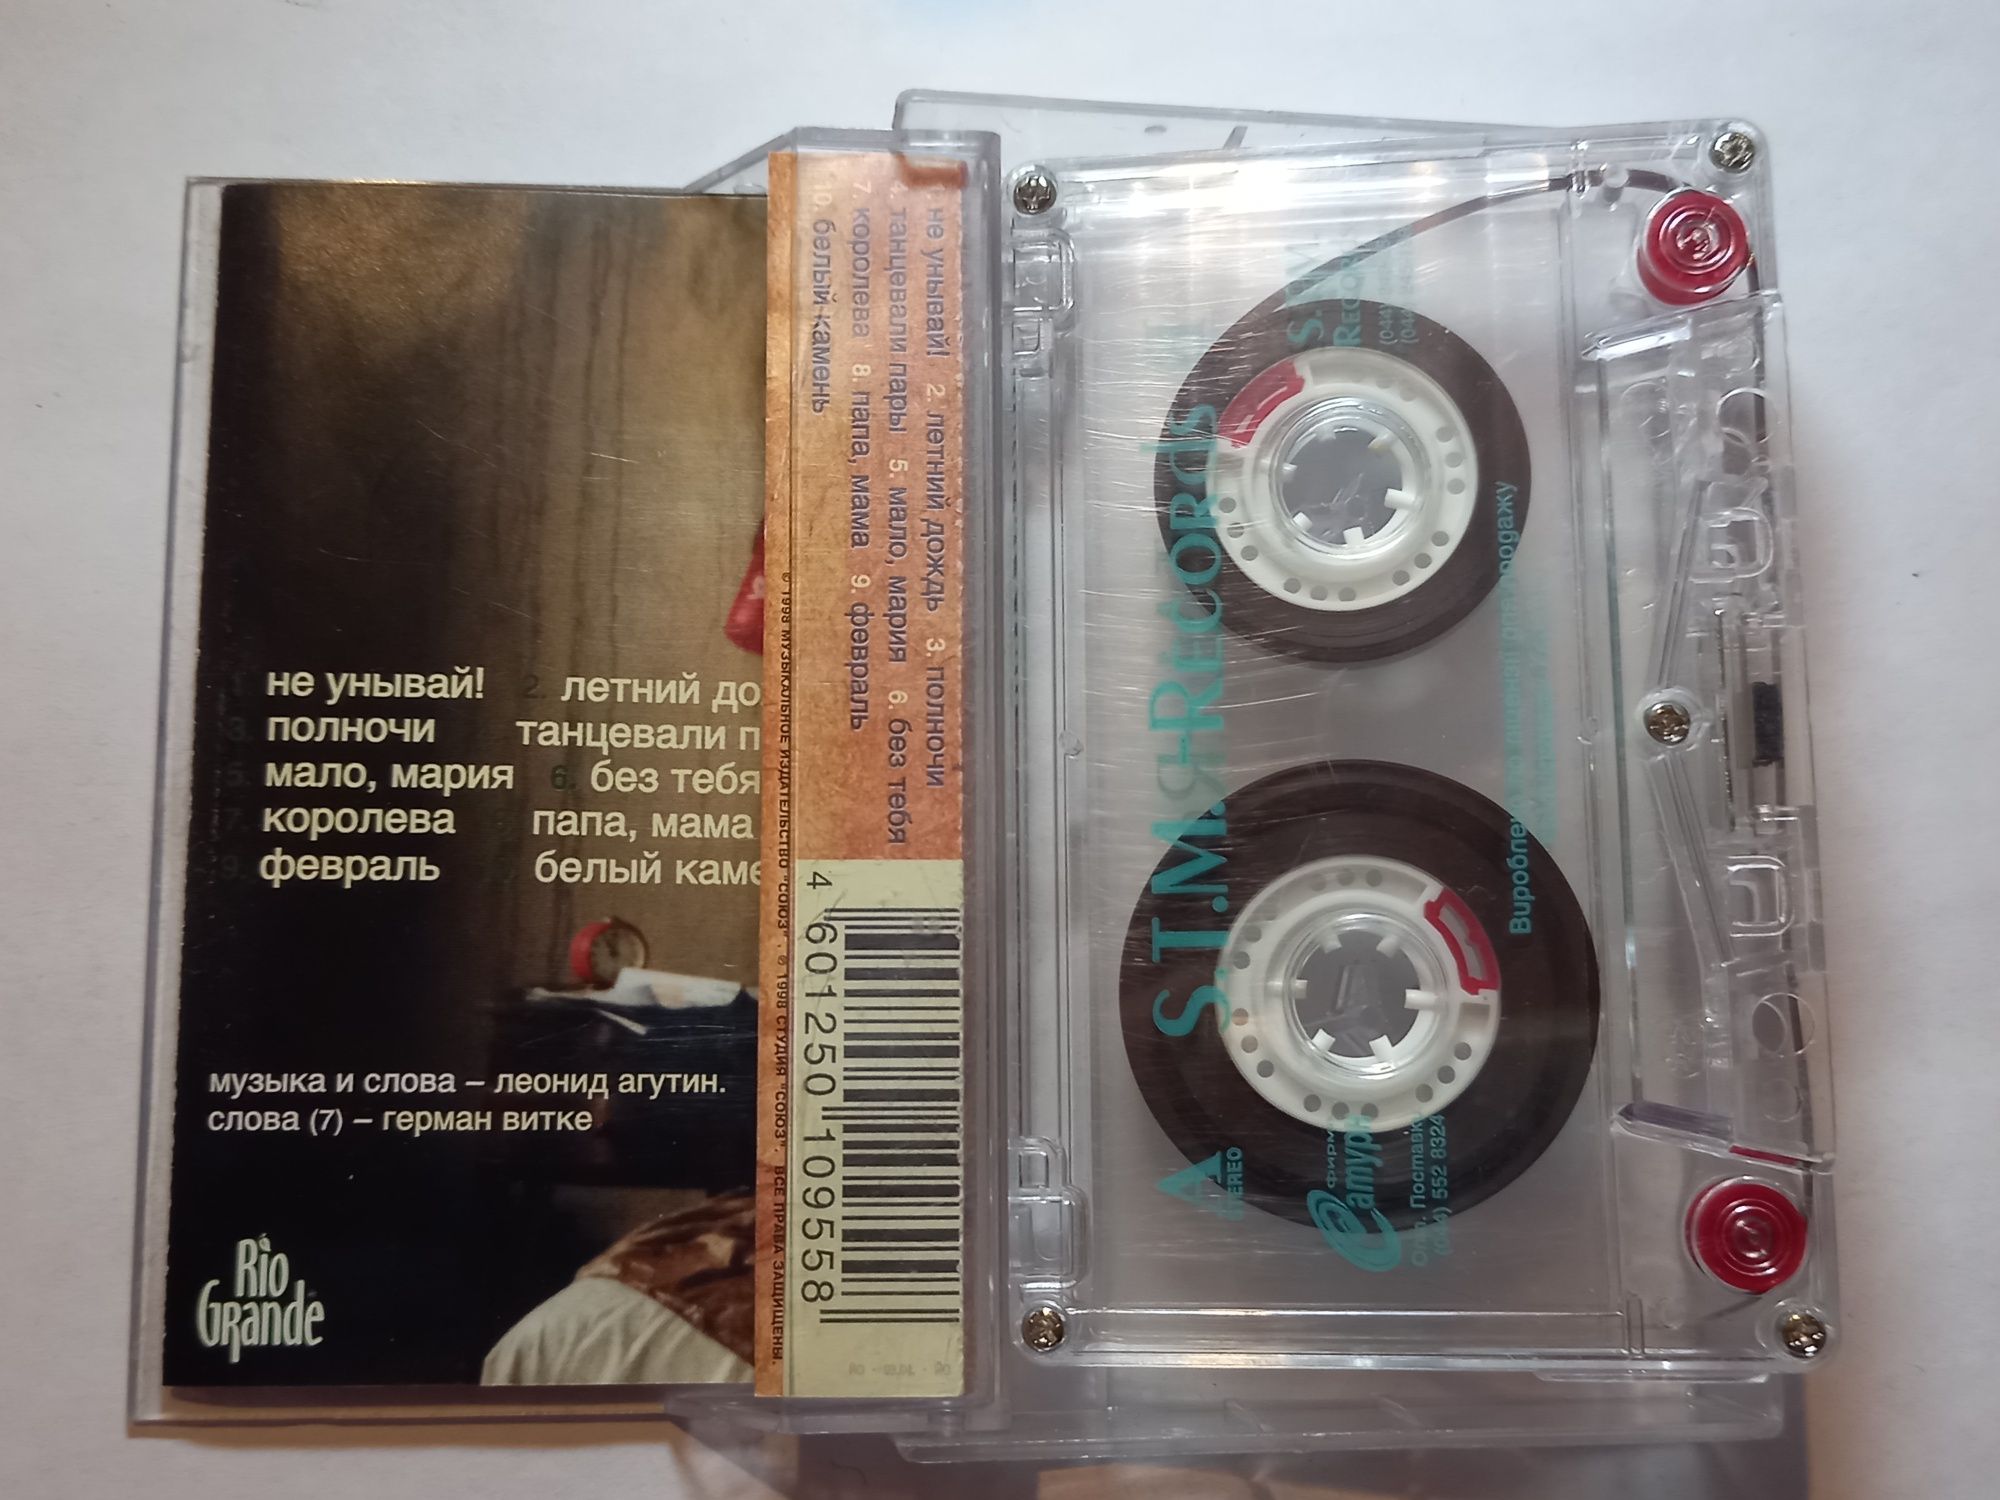 Аудиокассета Пресняков Антонов касета музыка 90-е 00-е винтаж песни